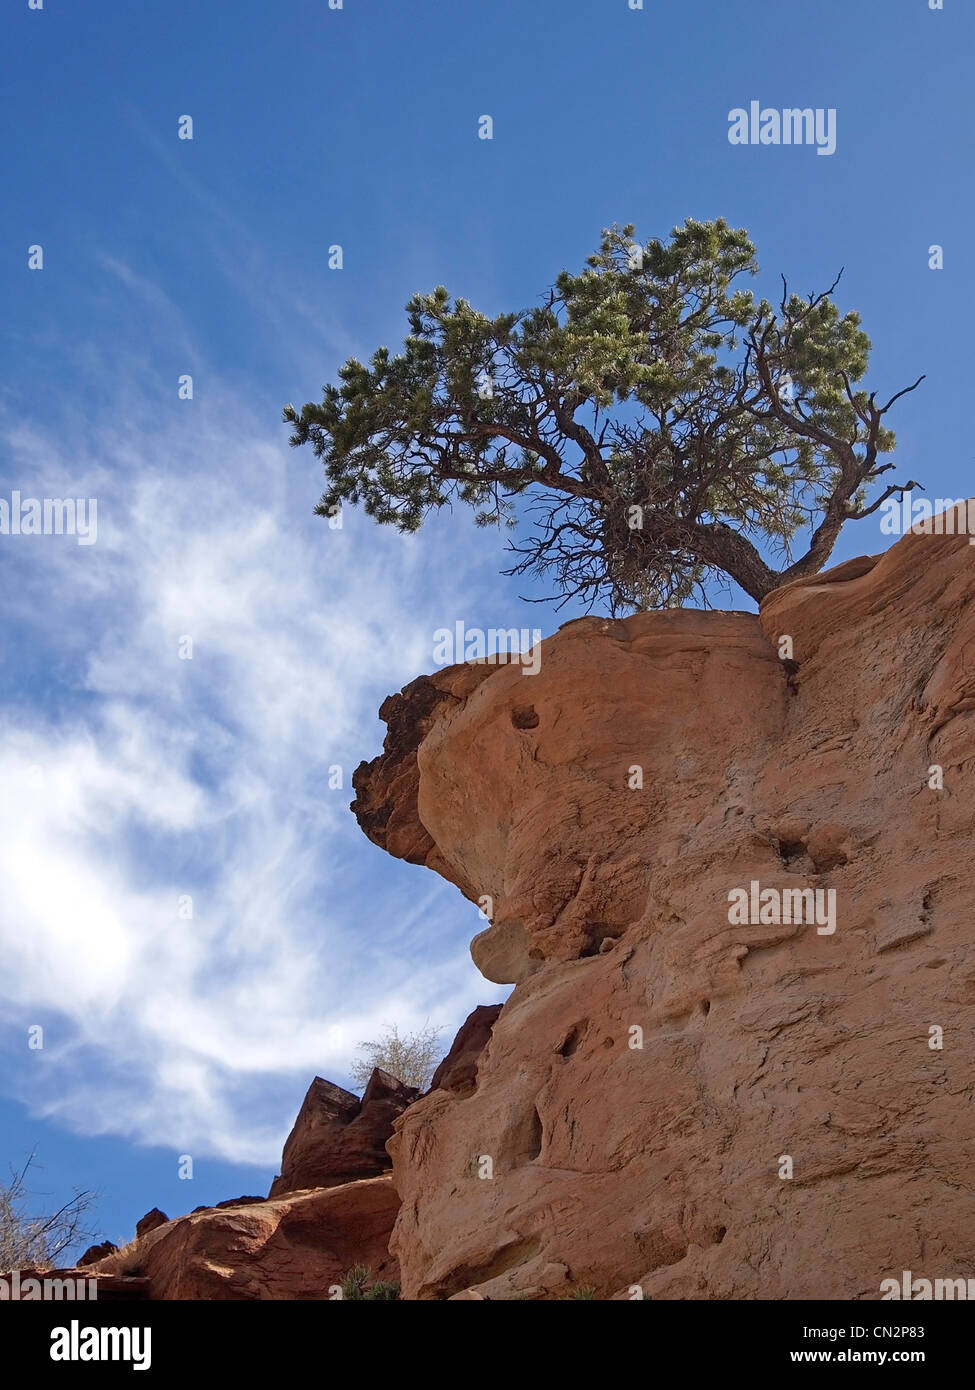 A small pinyon pine tree on the edge of a desert cliff. Stock Photo